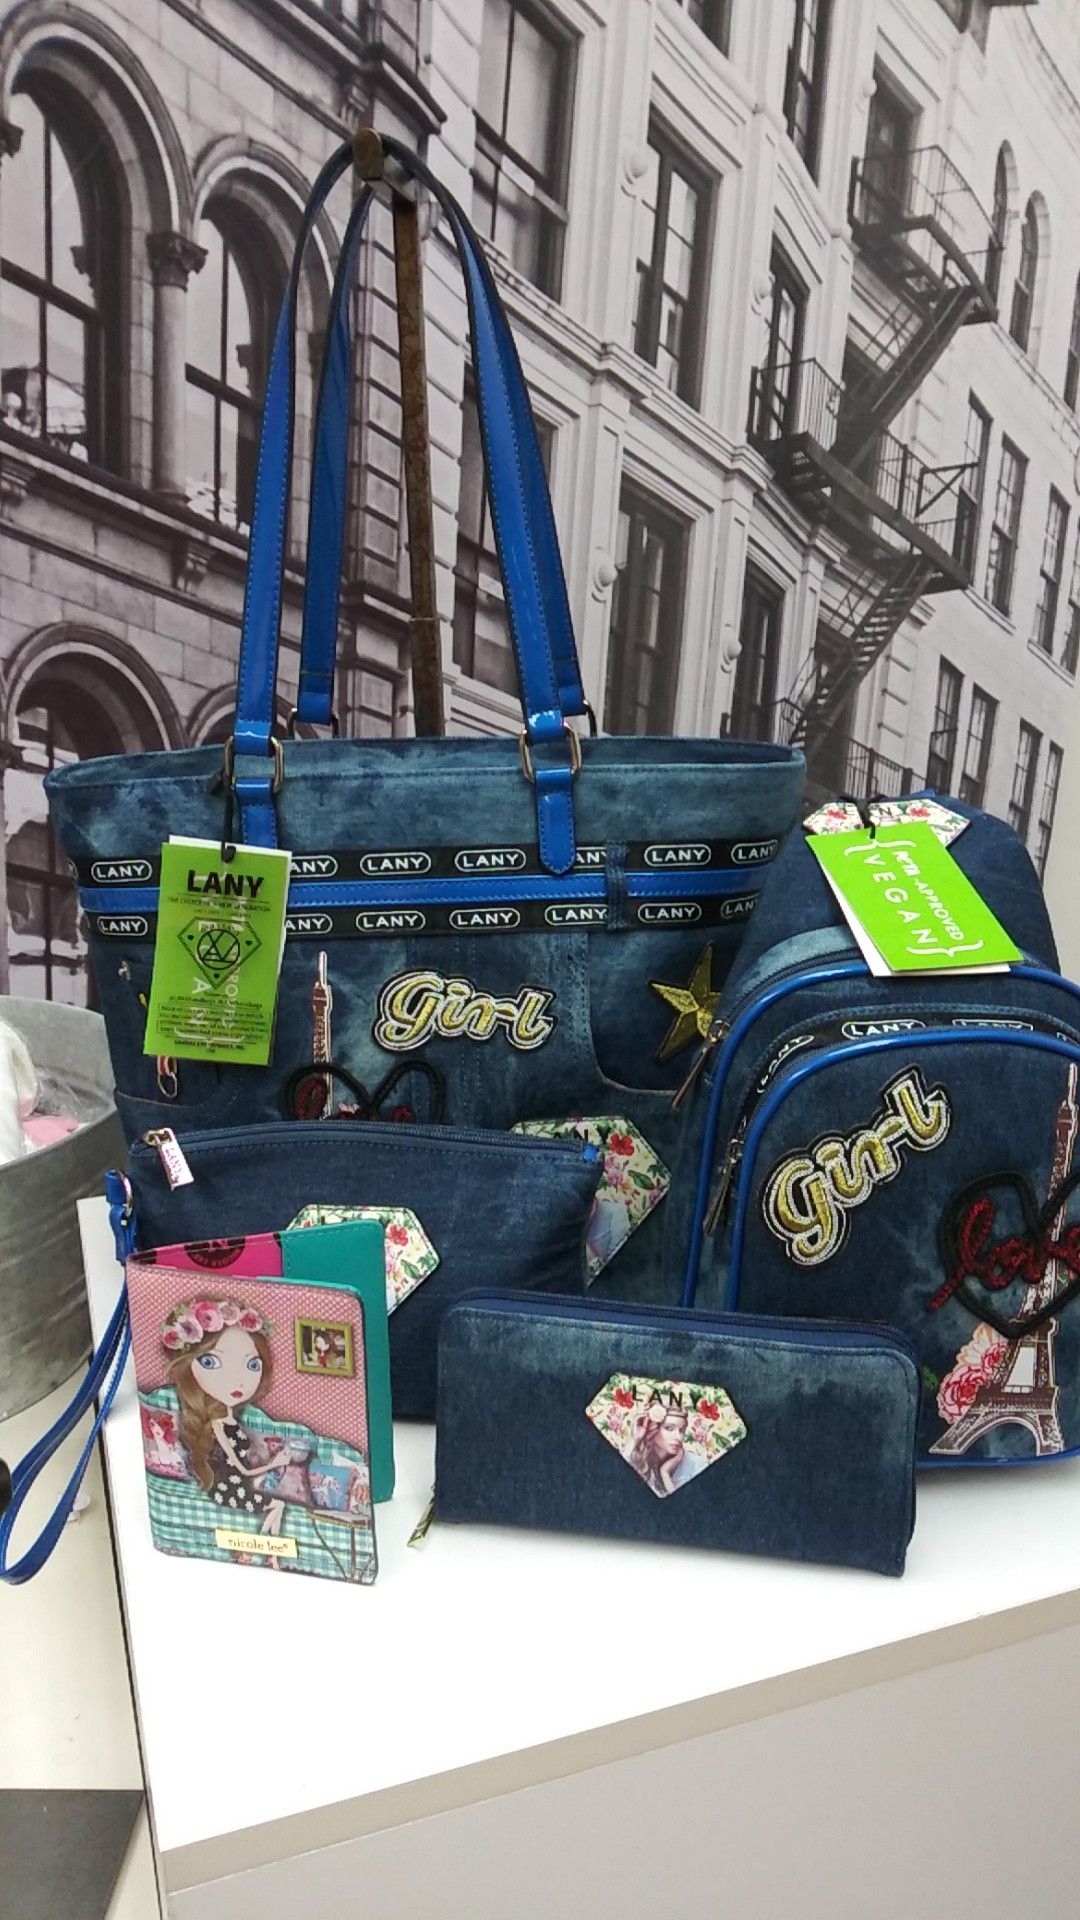 Lany Handbags on sale!!